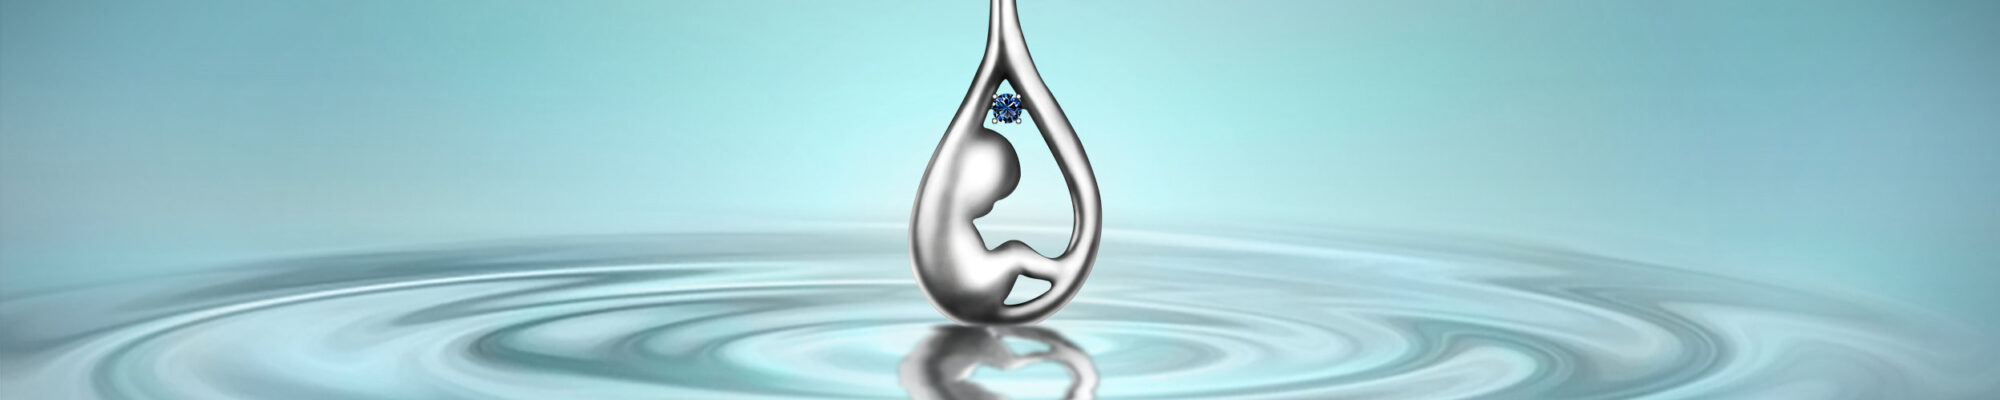 cropped Vita pendant with birthstone on water 150 dpi123 - Pelavida - Shop For Life